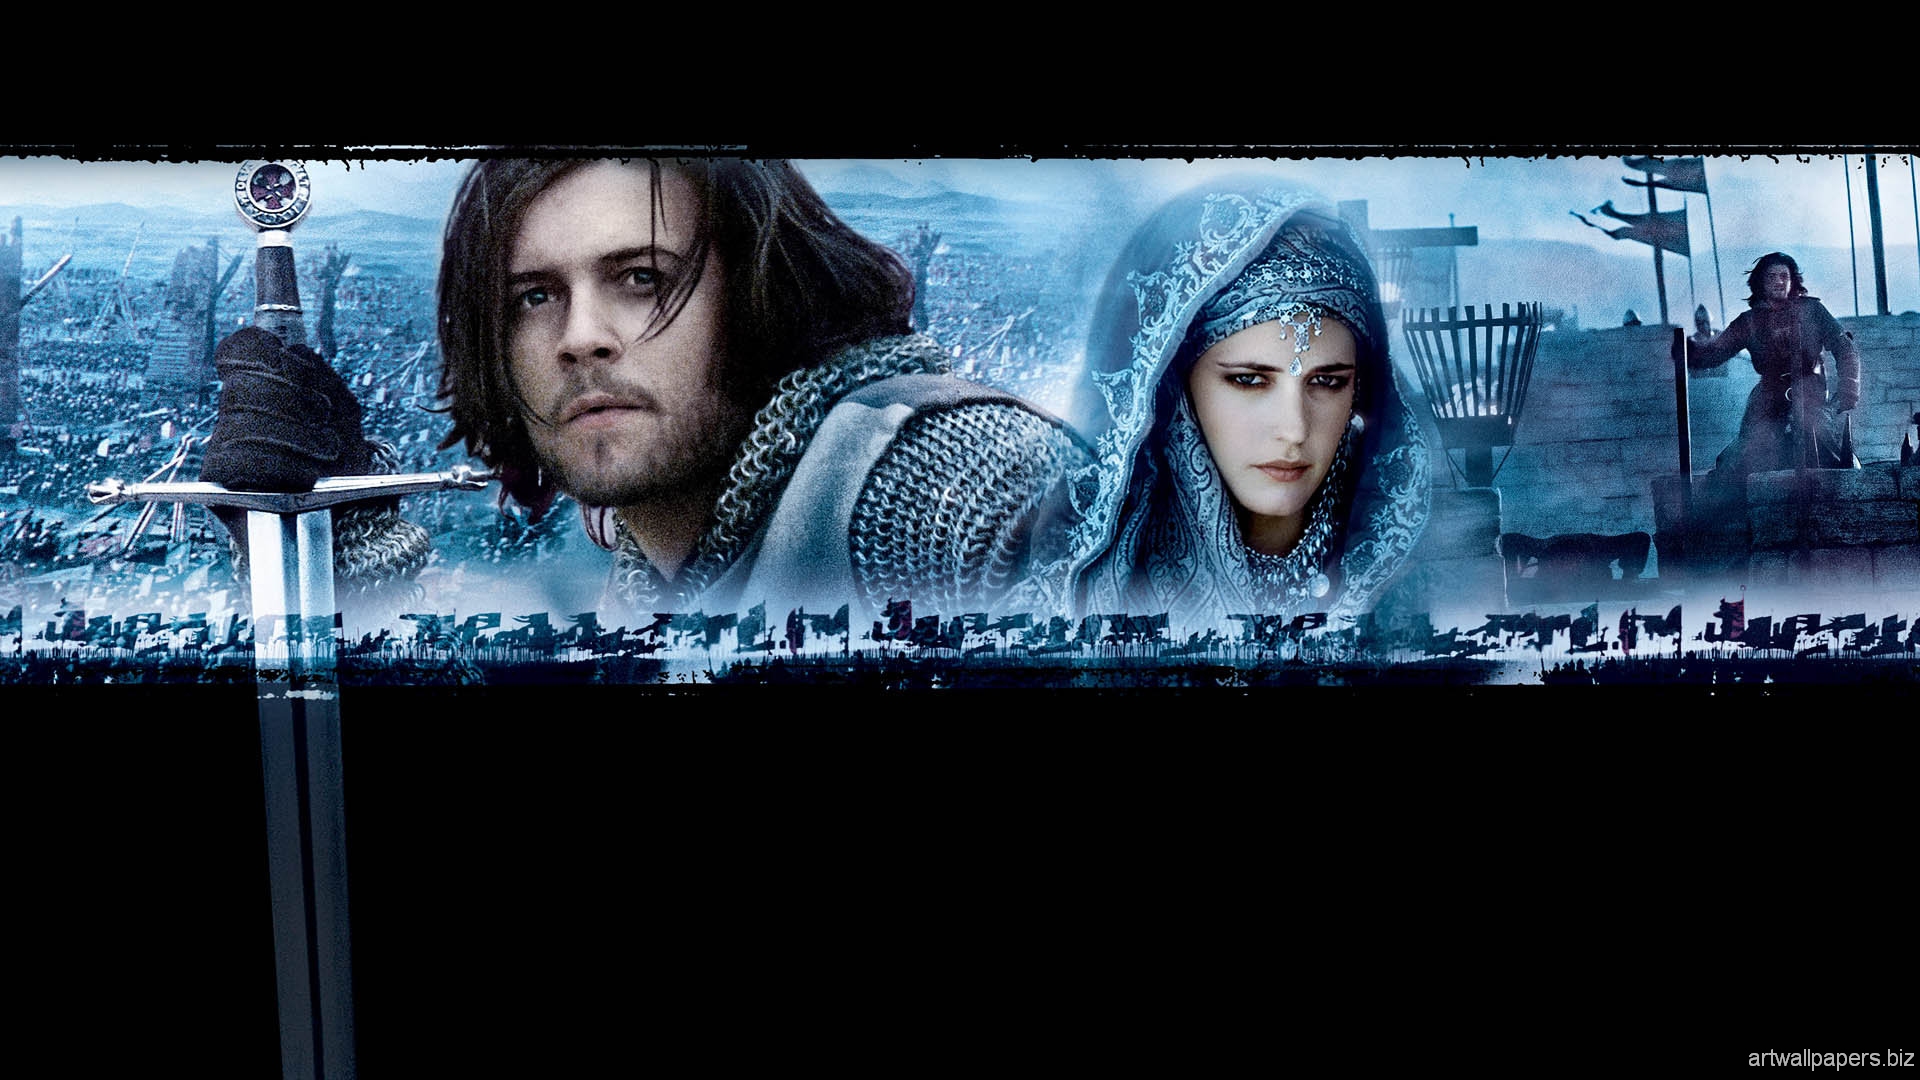 Movie Kingdom Of Heaven HD Wallpaper | Background Image